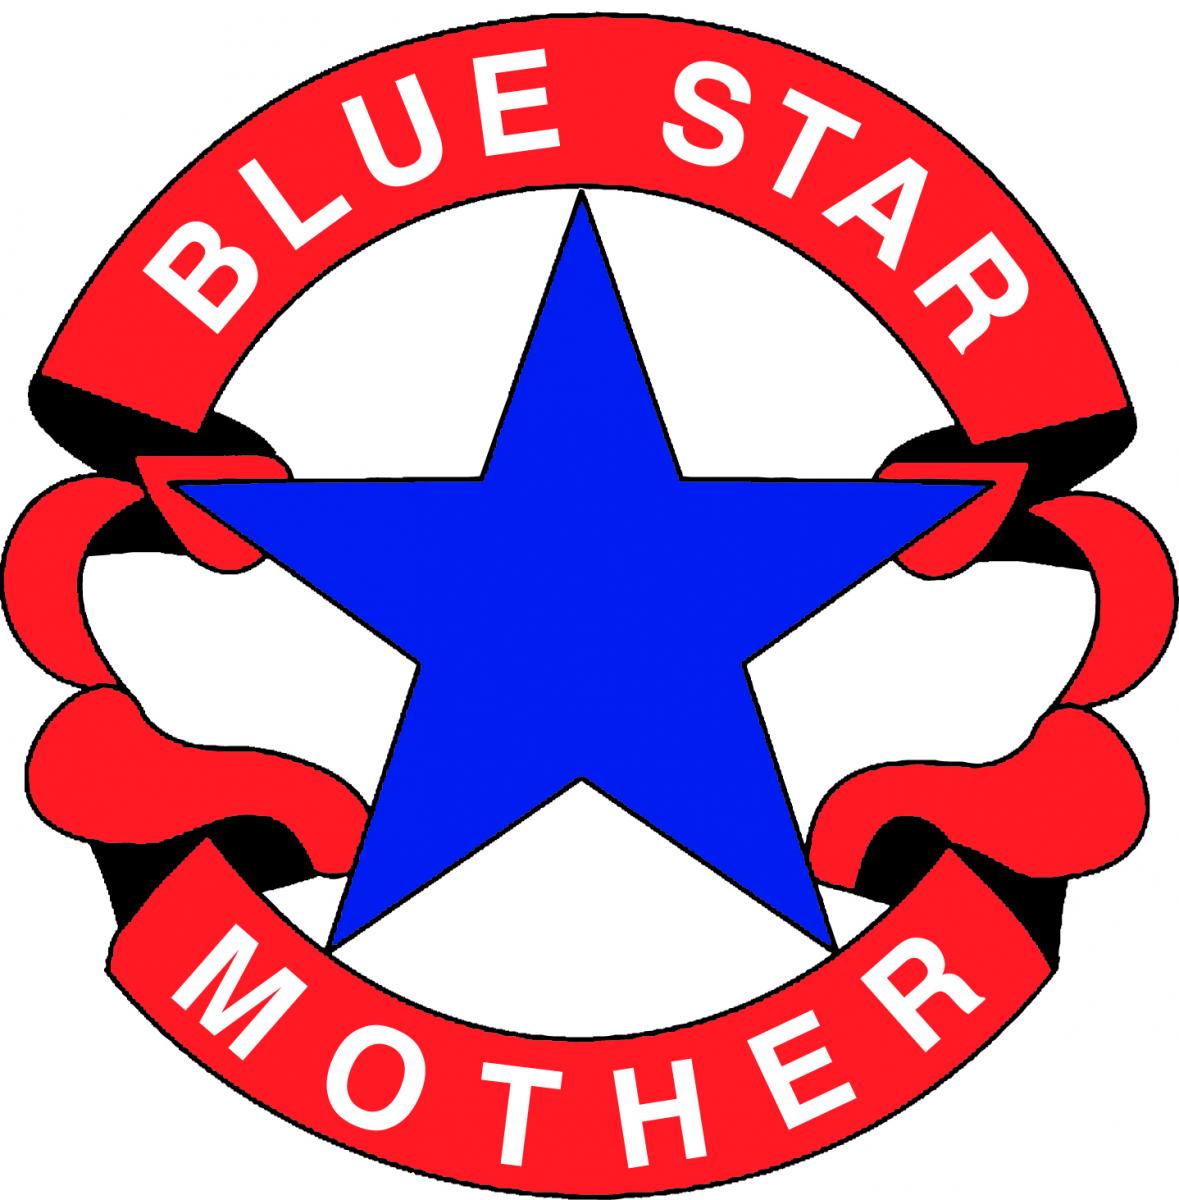 Support RI Blue Star Moms Rhode Island Blue Star Moms